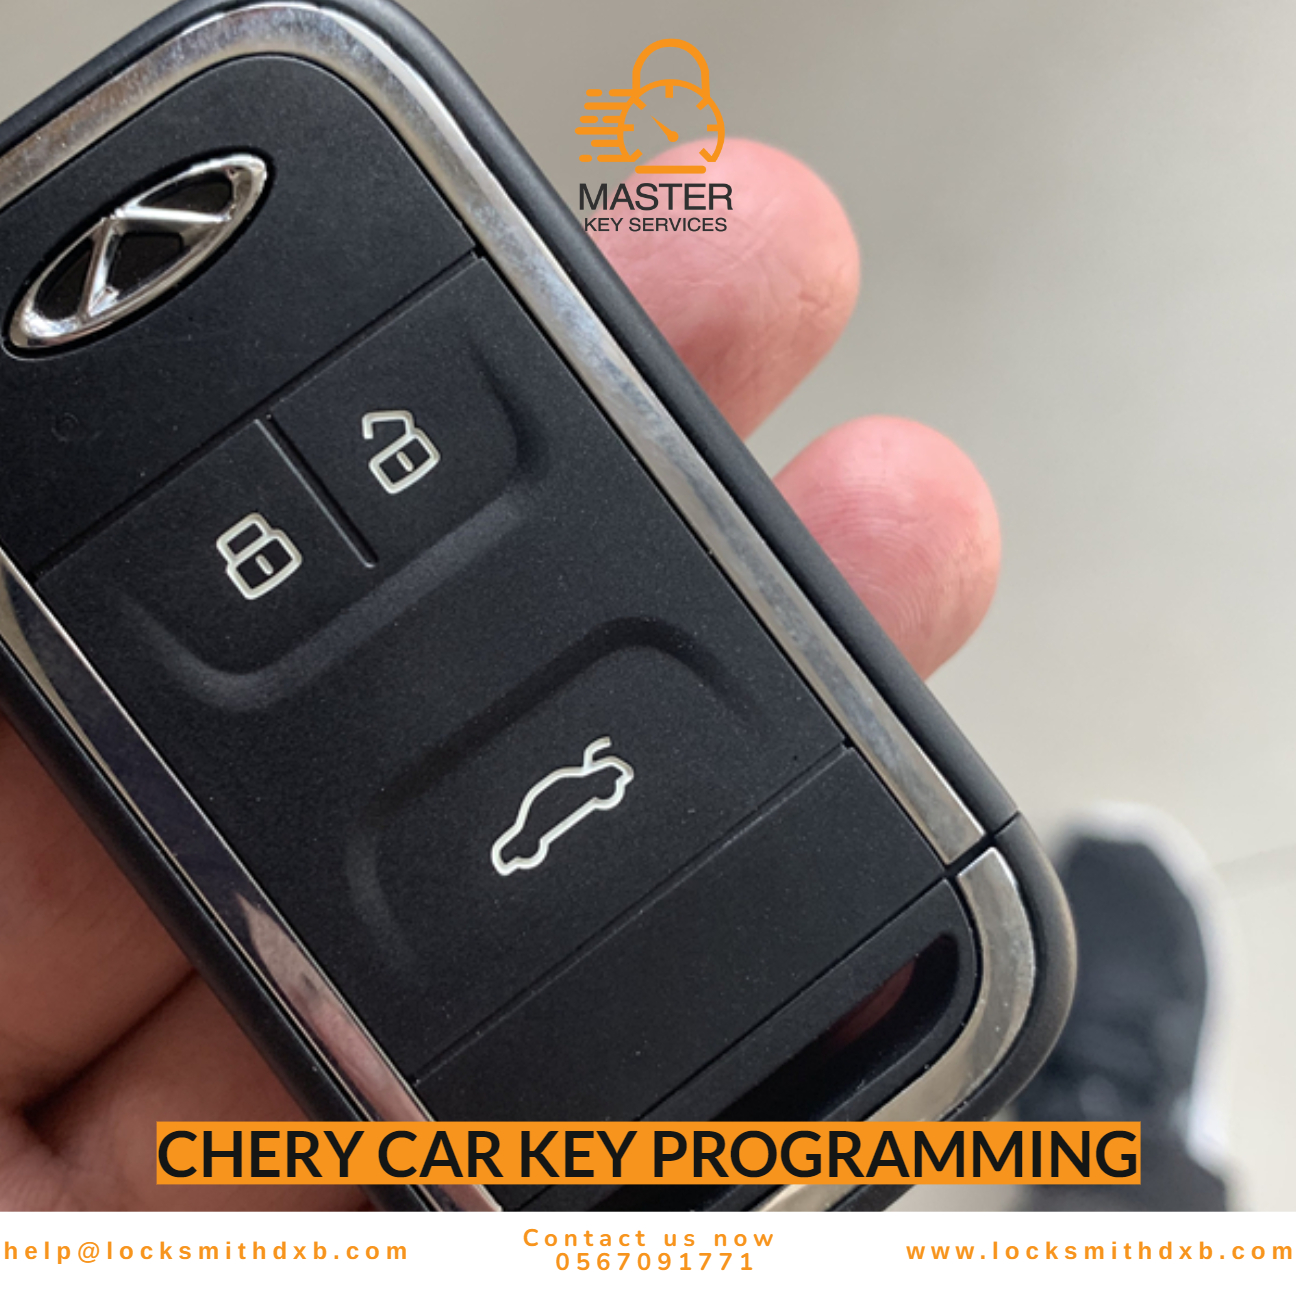 CHERY car key programming